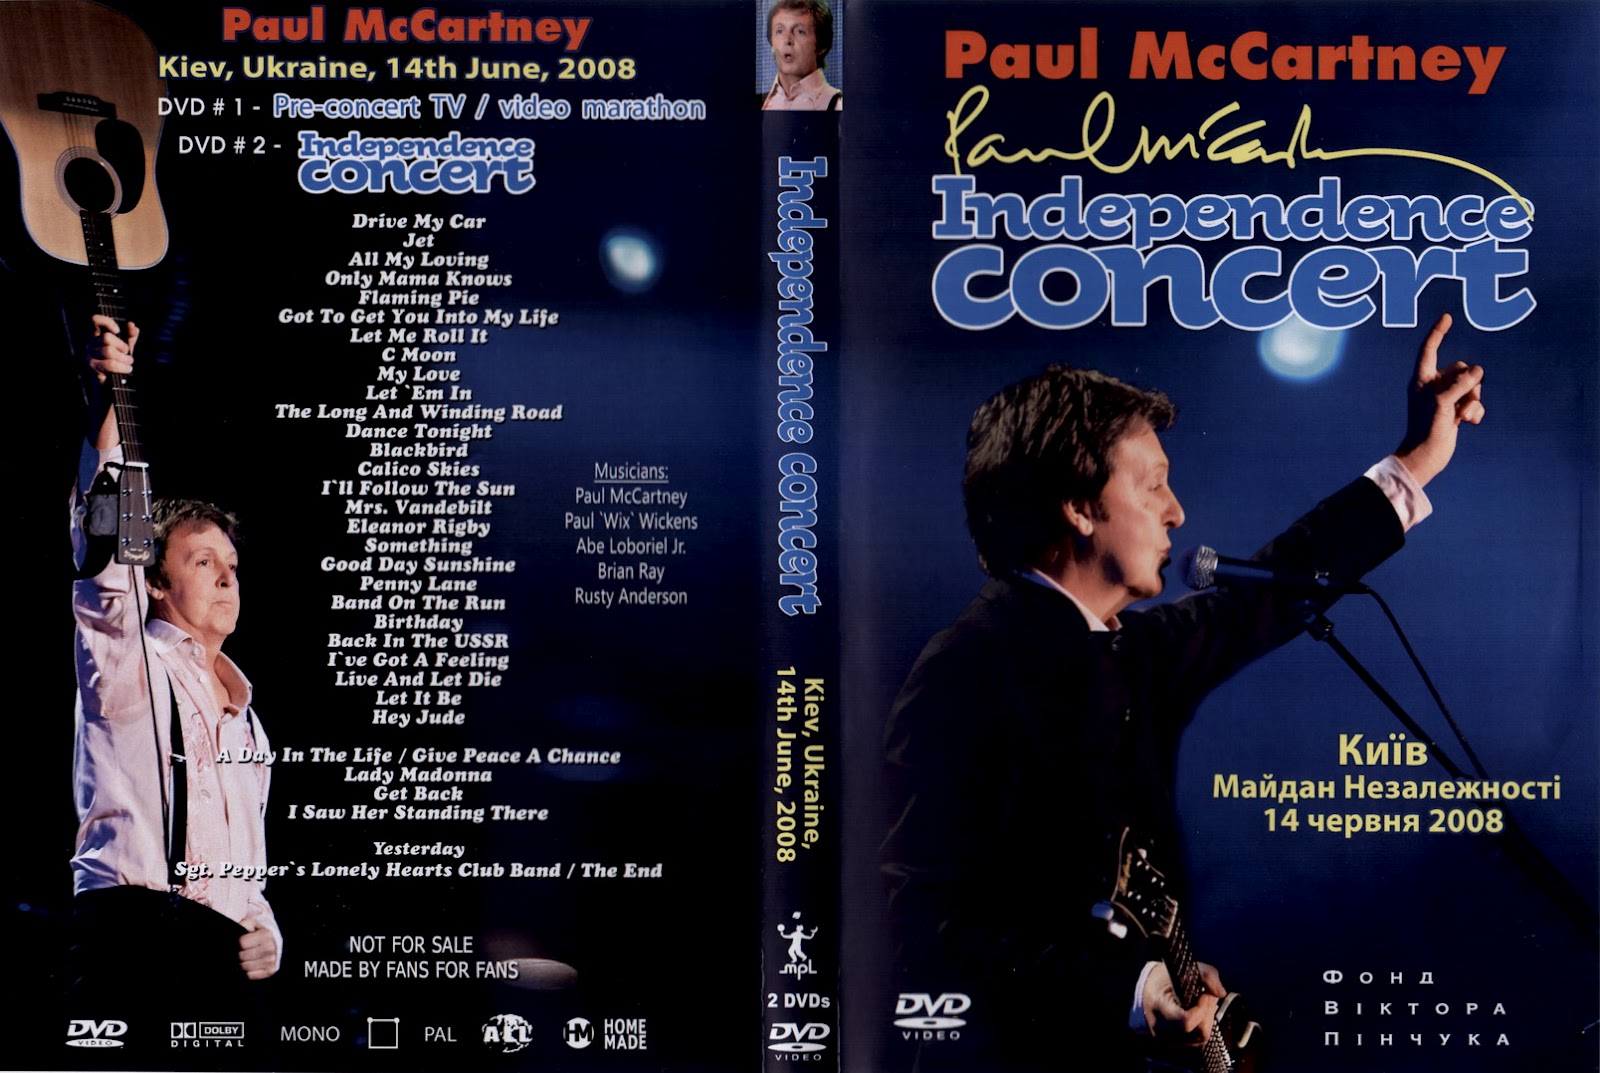 Paul mccartney live. Paul MCCARTNEY Live 2008. Paul MCCARTNEY Live in Kiev 2008. Пол Маккартни в Киеве 2008. Концерт пола Маккартни в Киеве 2008.